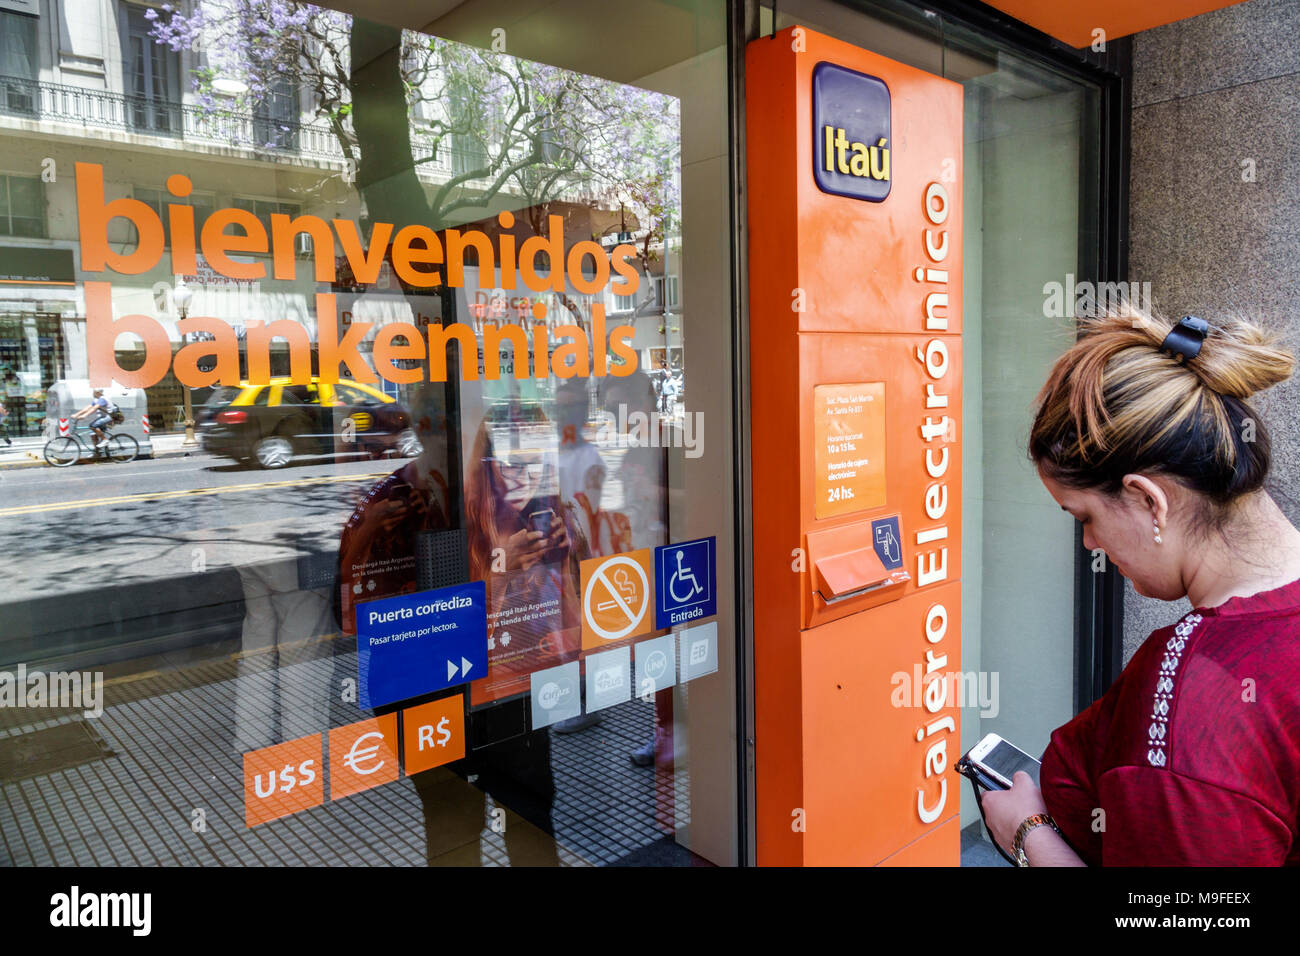 Buenos Aires Argentina,Retiro,Itau Bank,donna donne,bancomat,bancomat,contanti,ingresso,porta,cartello di benvenuto,ispanico,ARG171128167 Foto Stock